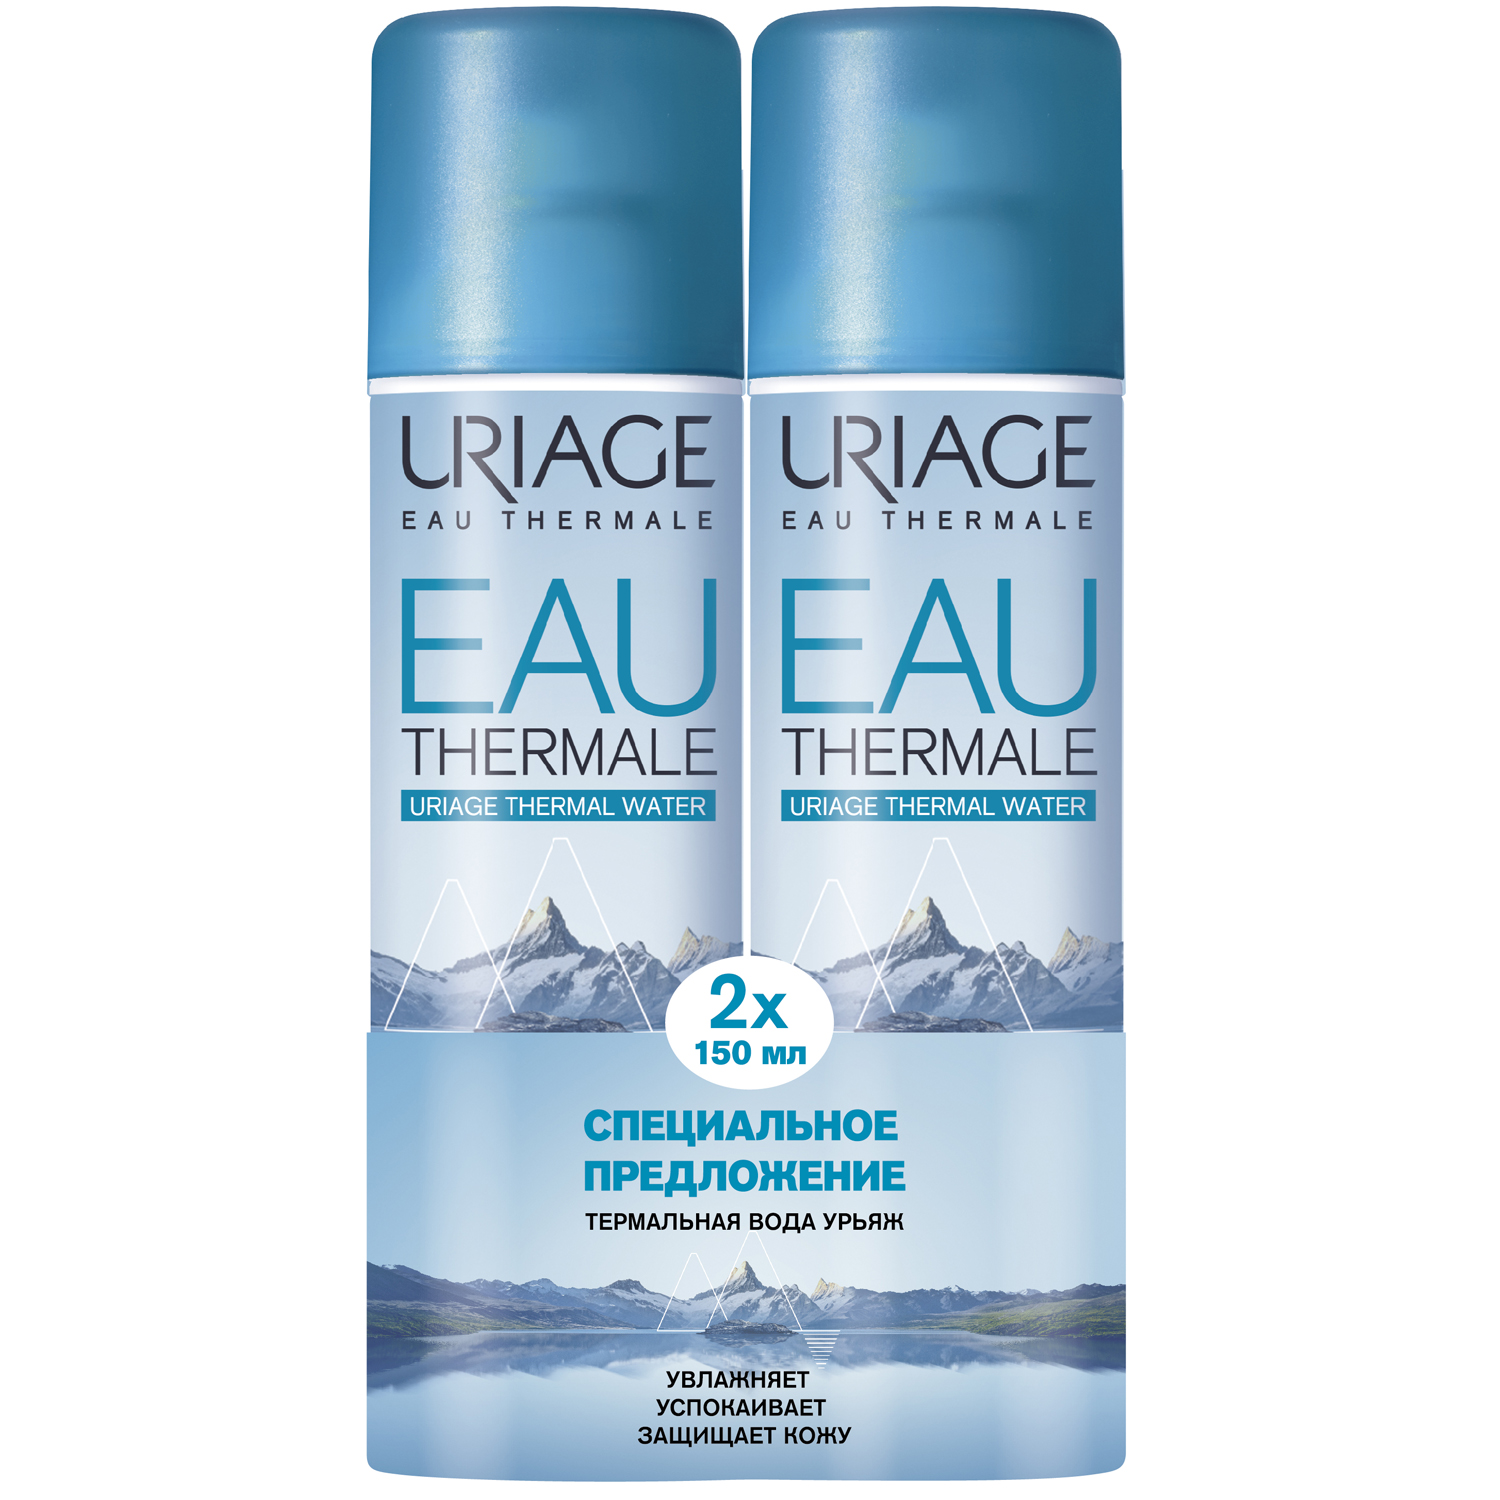 Uriage Термальная вода Урьяж, 2 х 150 мл (Uriage, Eau thermale) uriage термальная вода урьяж 2 х 150 мл uriage eau thermale